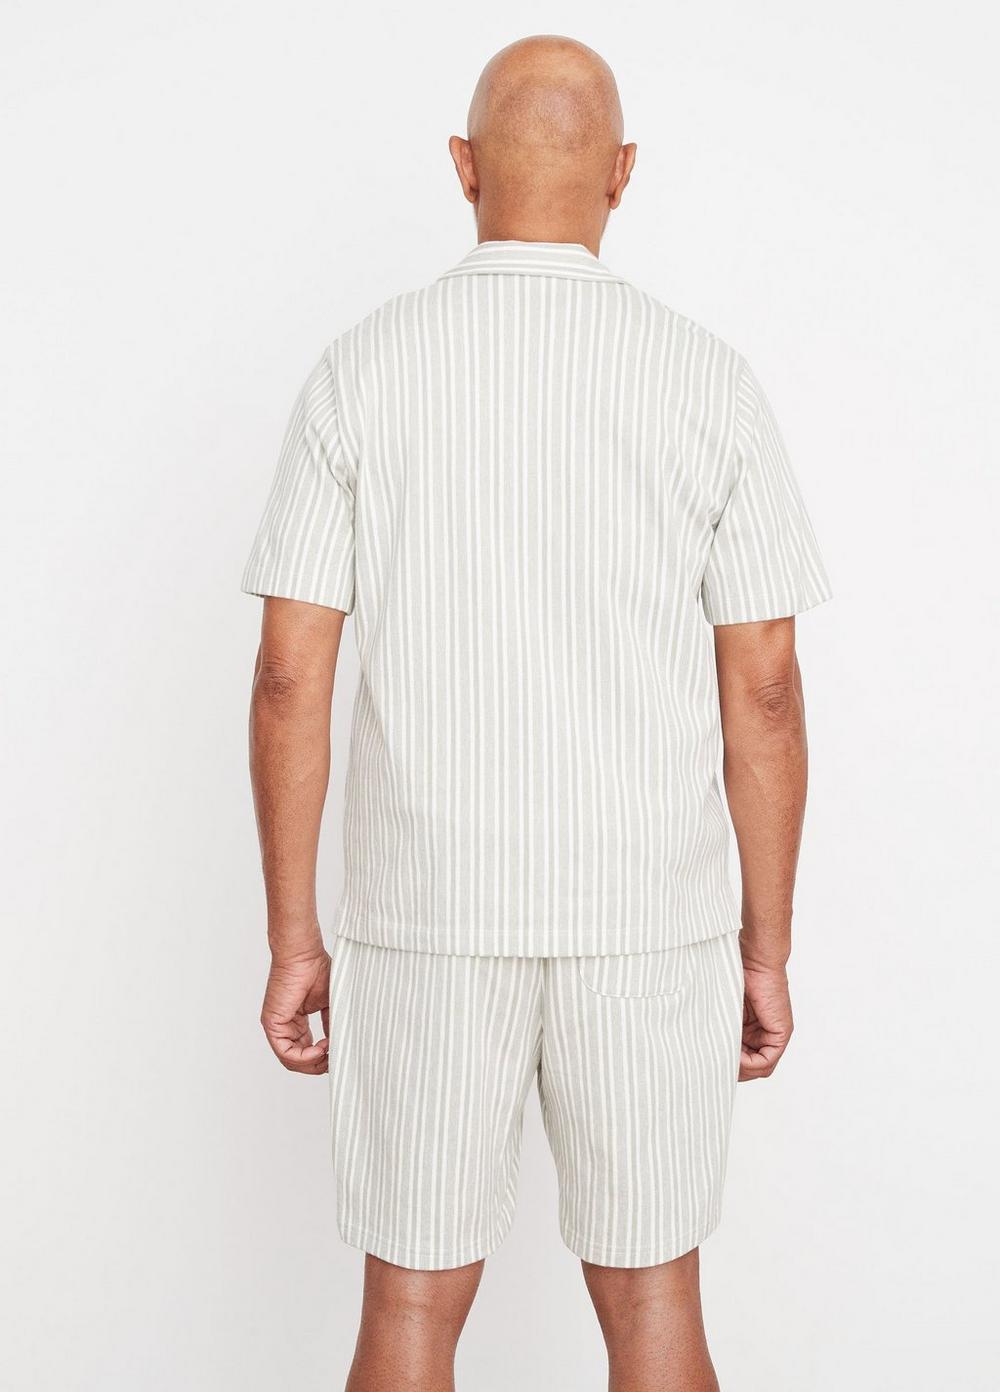 Cabana Stripe Short-Sleeve Button Down Shirt in Shirts | Vince